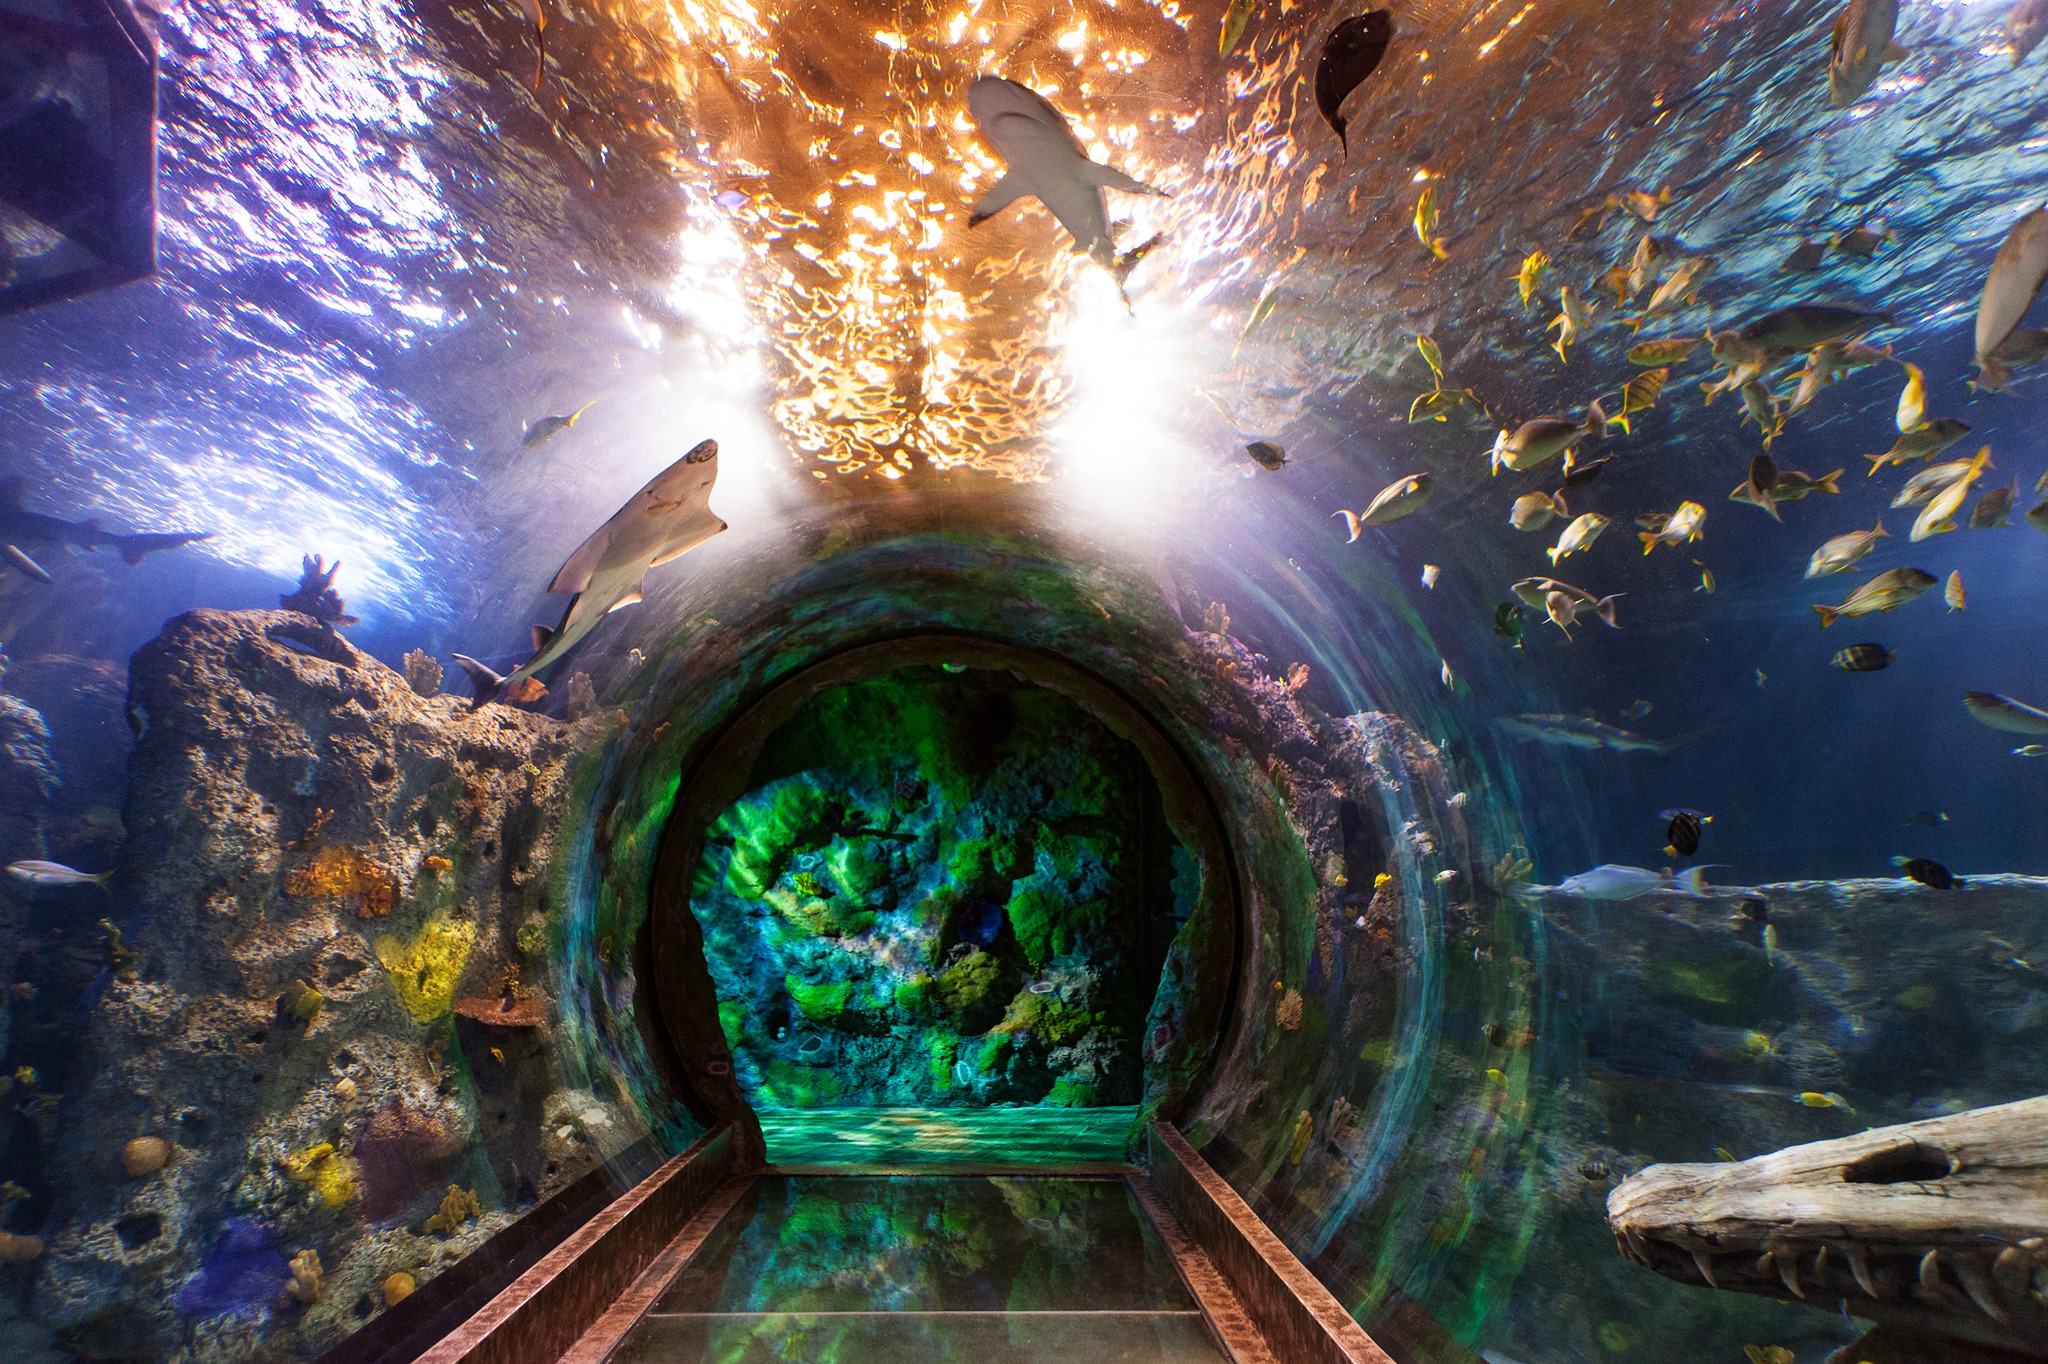 Sea Life Aquarium Has The Only 360-Degree Ocean Tunnel In Arizona